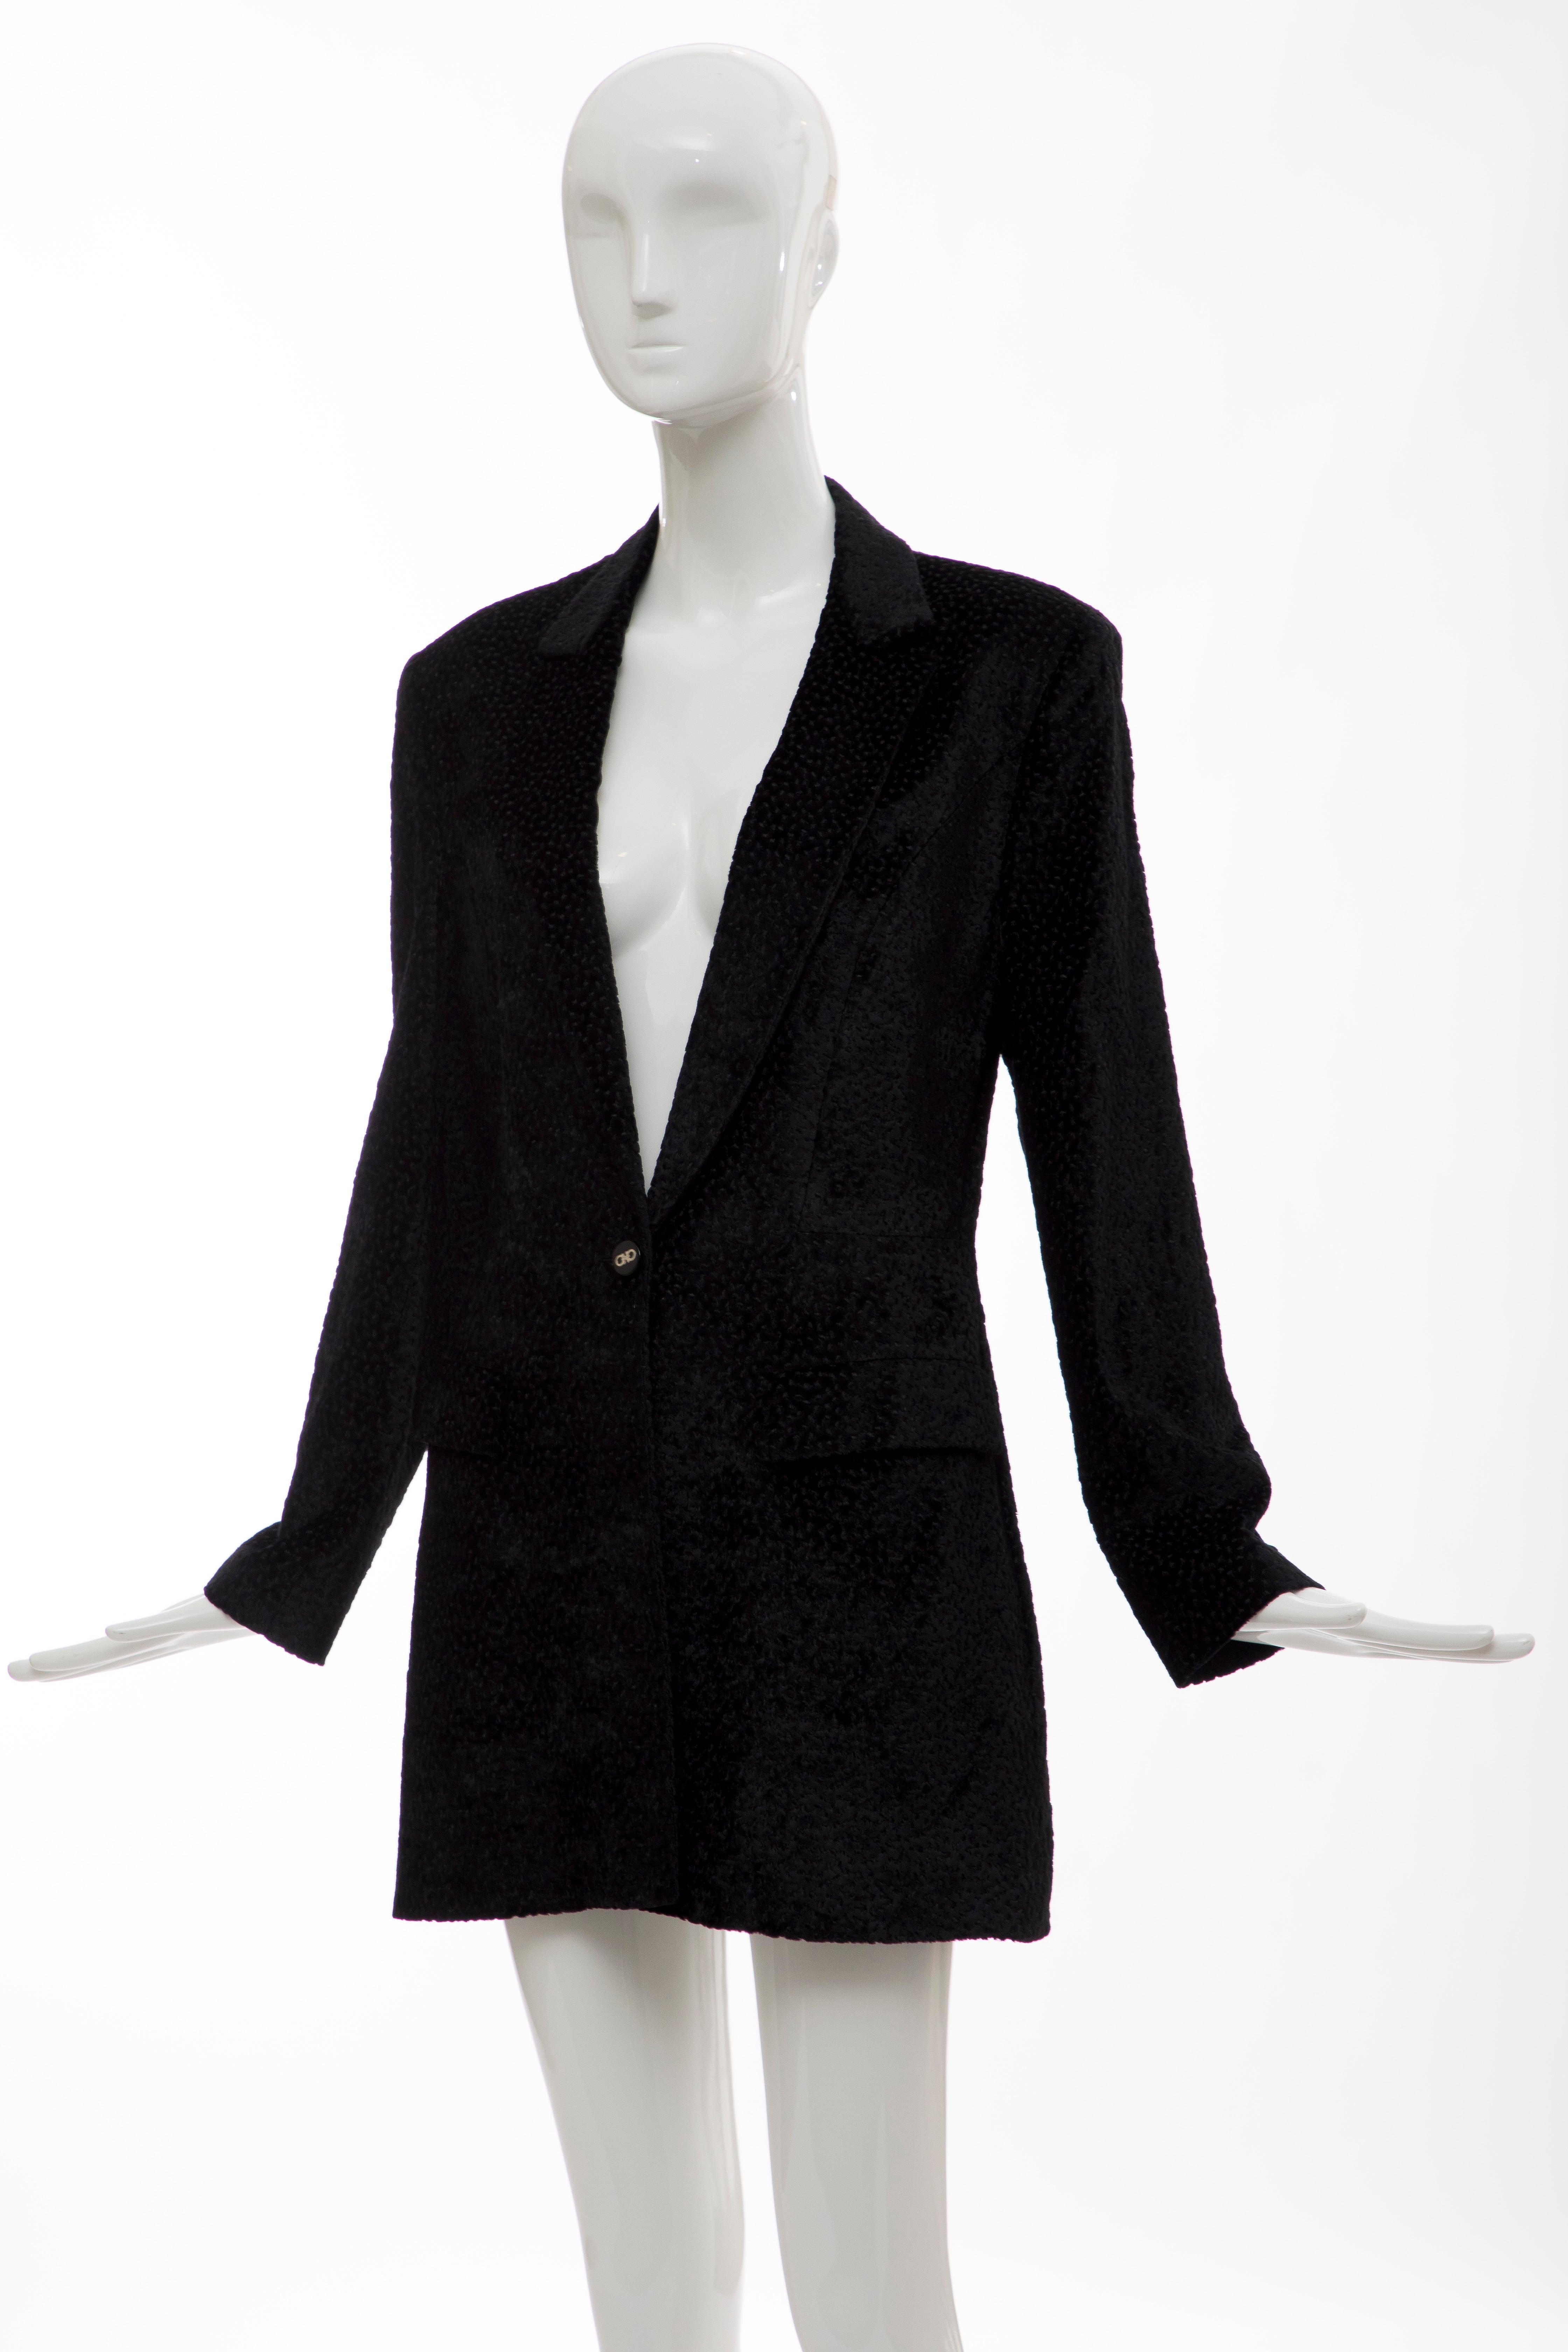 Salvatore Ferragamo Black Flecked Velvet Blazer, Circa: 1990's For Sale 6